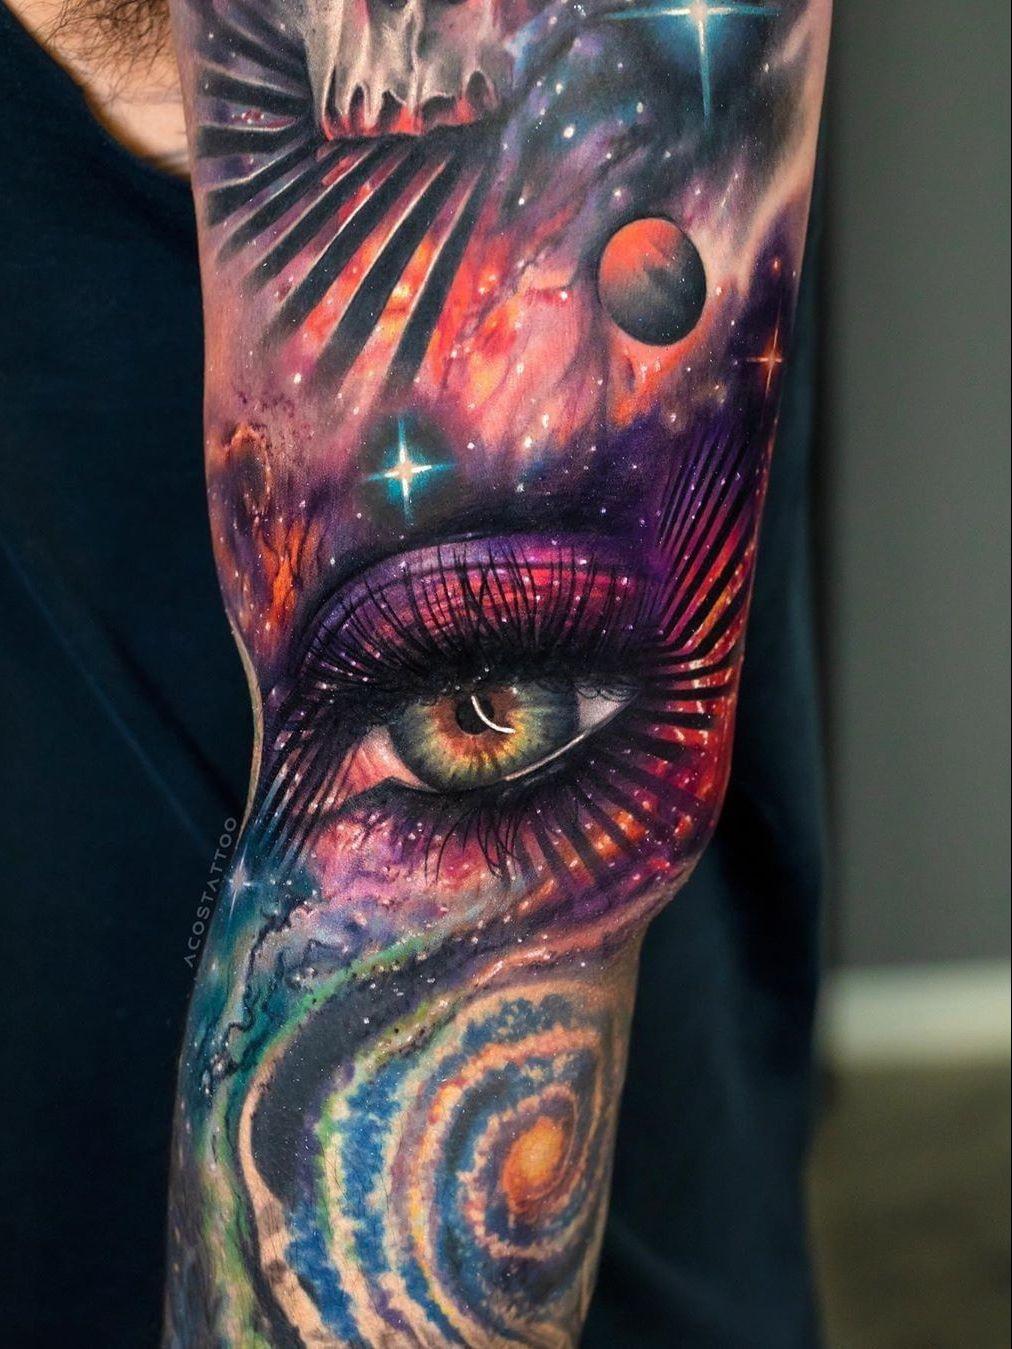 Eye of horus tattoo idea | TattoosAI